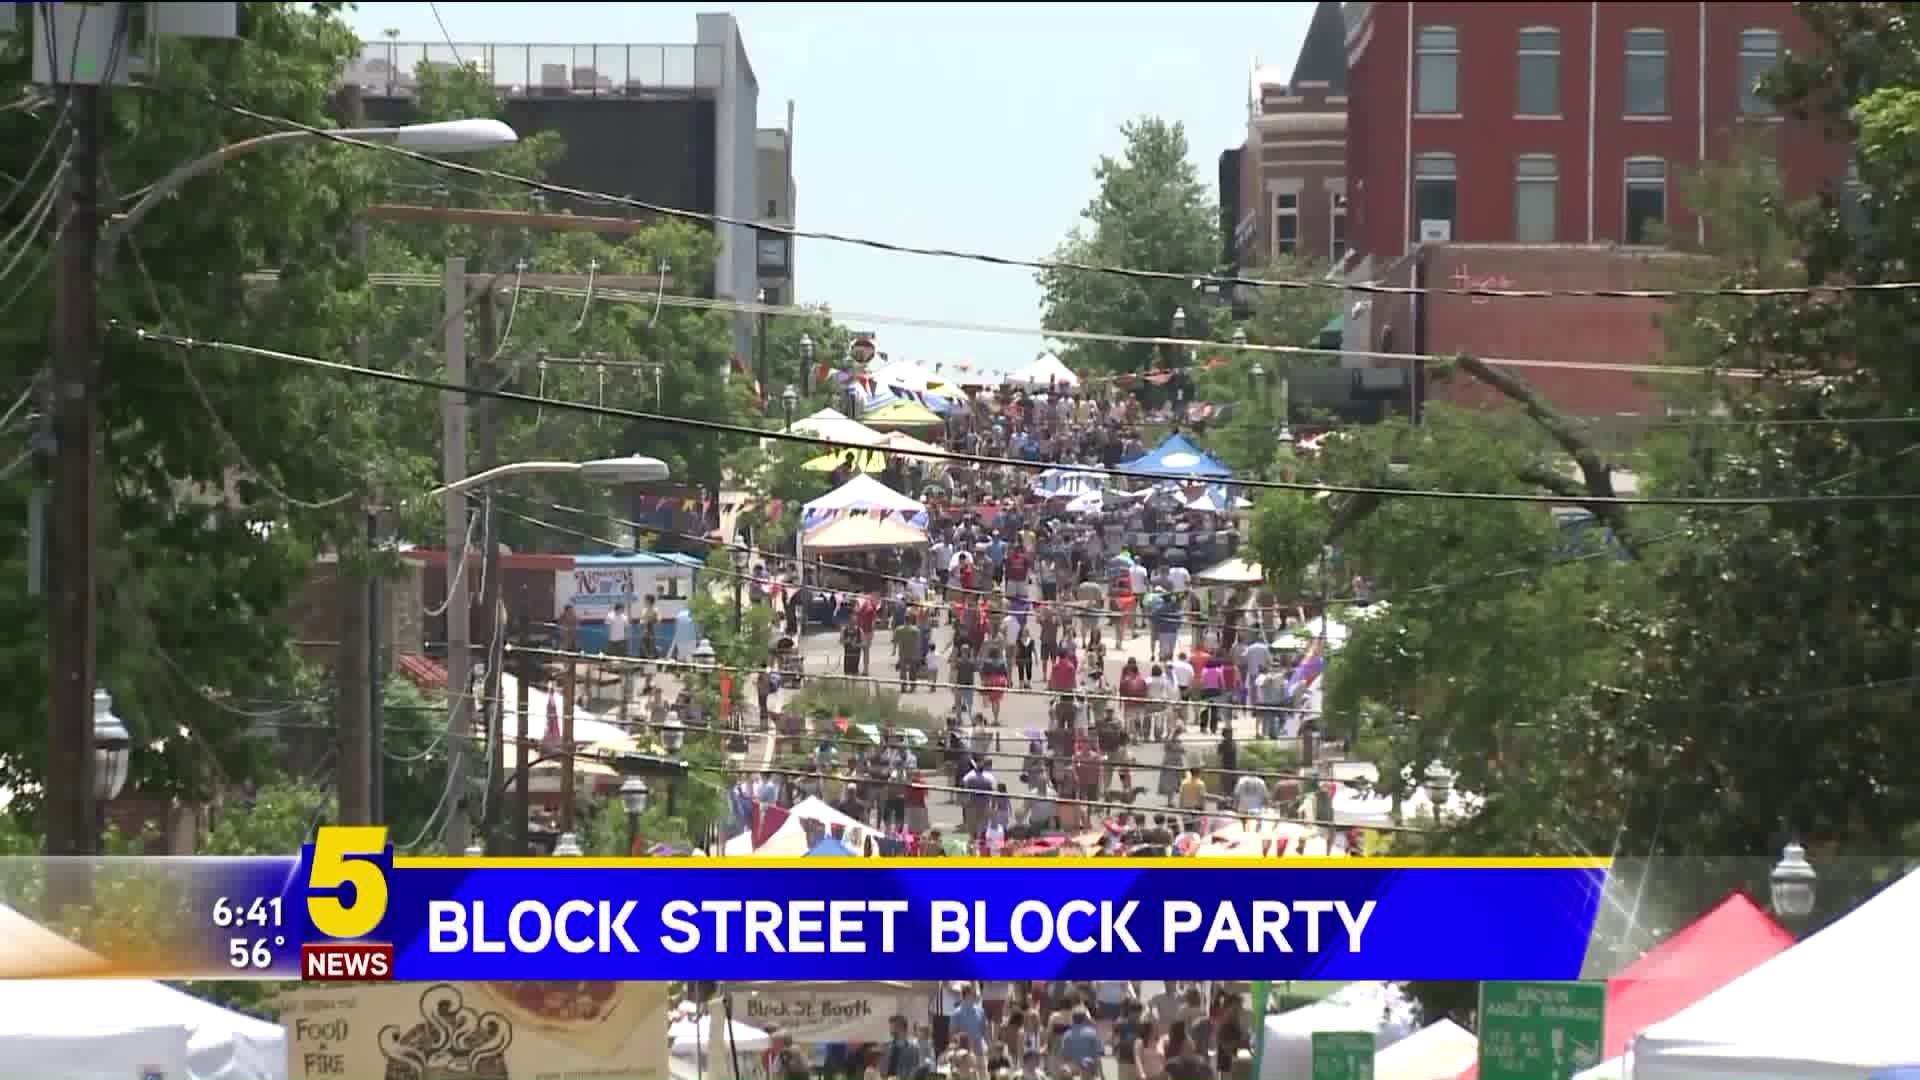 Block Street Block Party